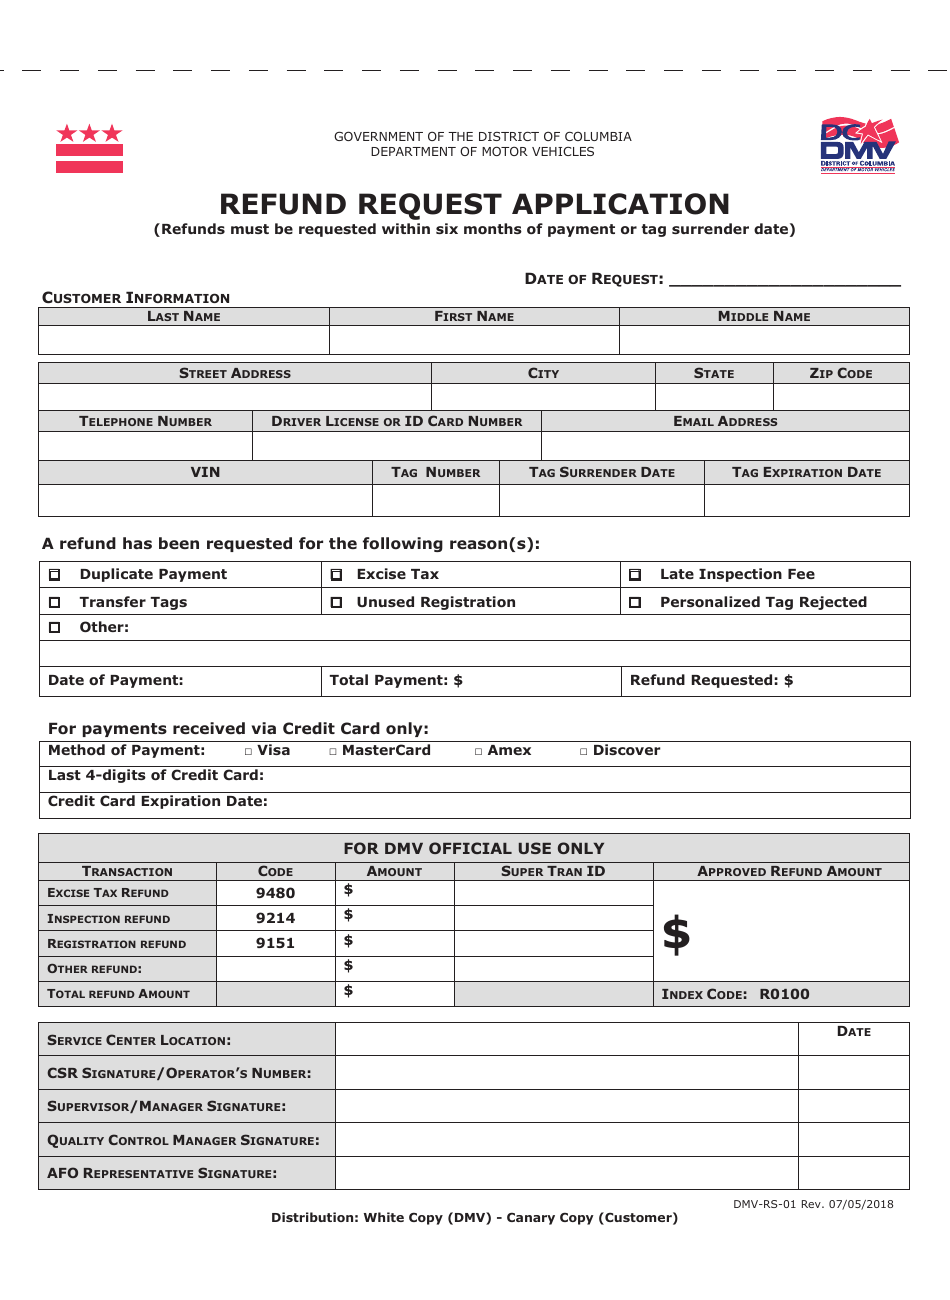 Form DMV-RS-01 Refund Request Application - Washington, D.C., Page 1